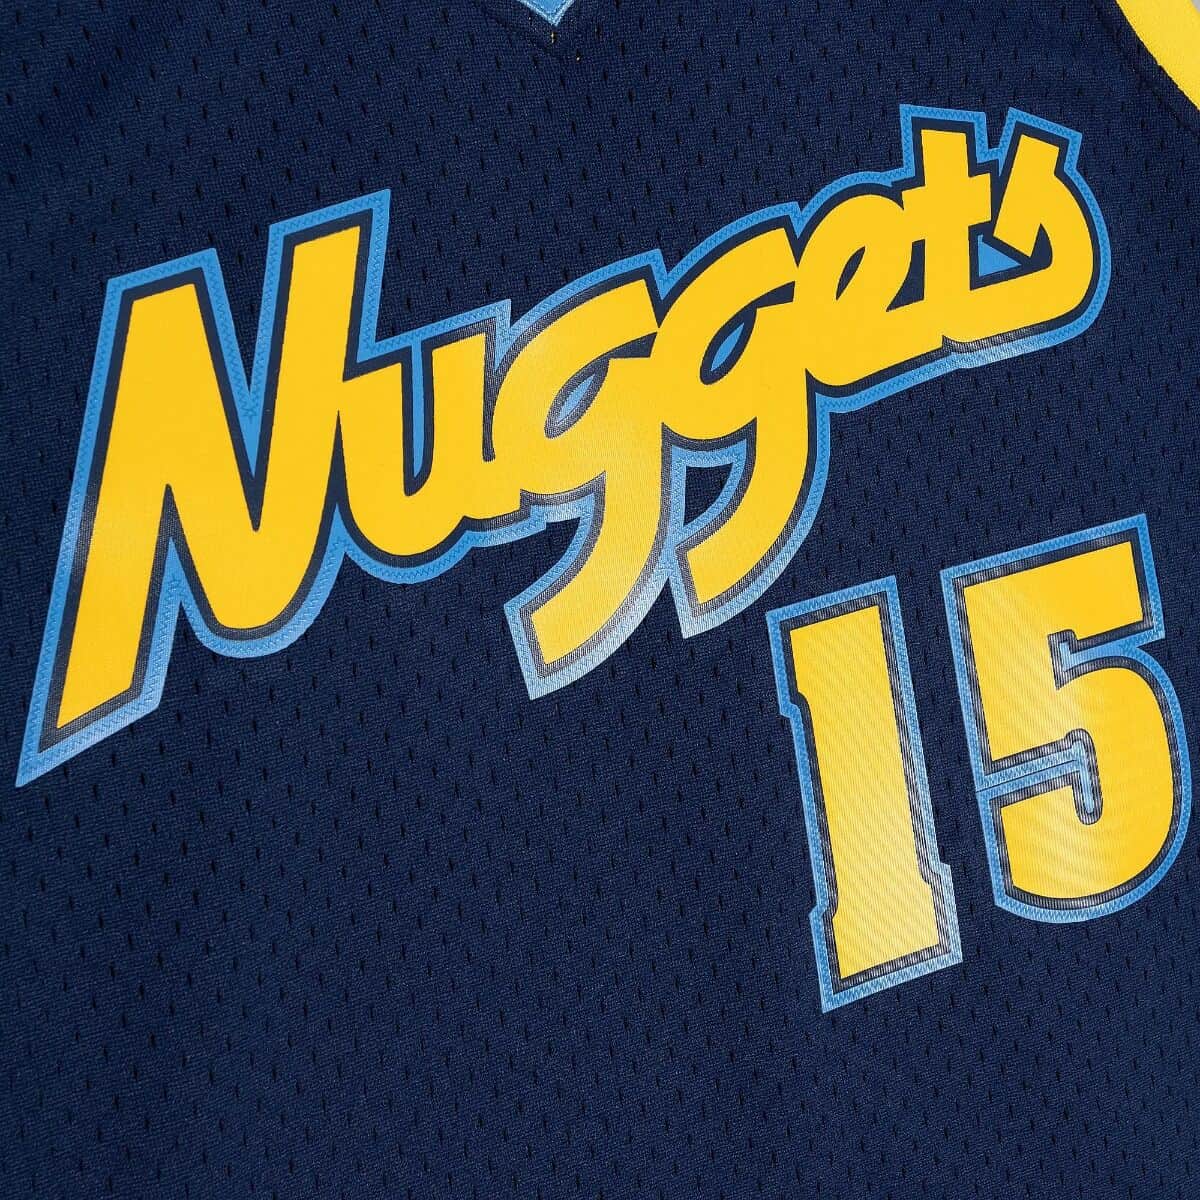 NBA Swingman Jersey Denver Nuggets Alternate 2006-07 Carmelo Anthony